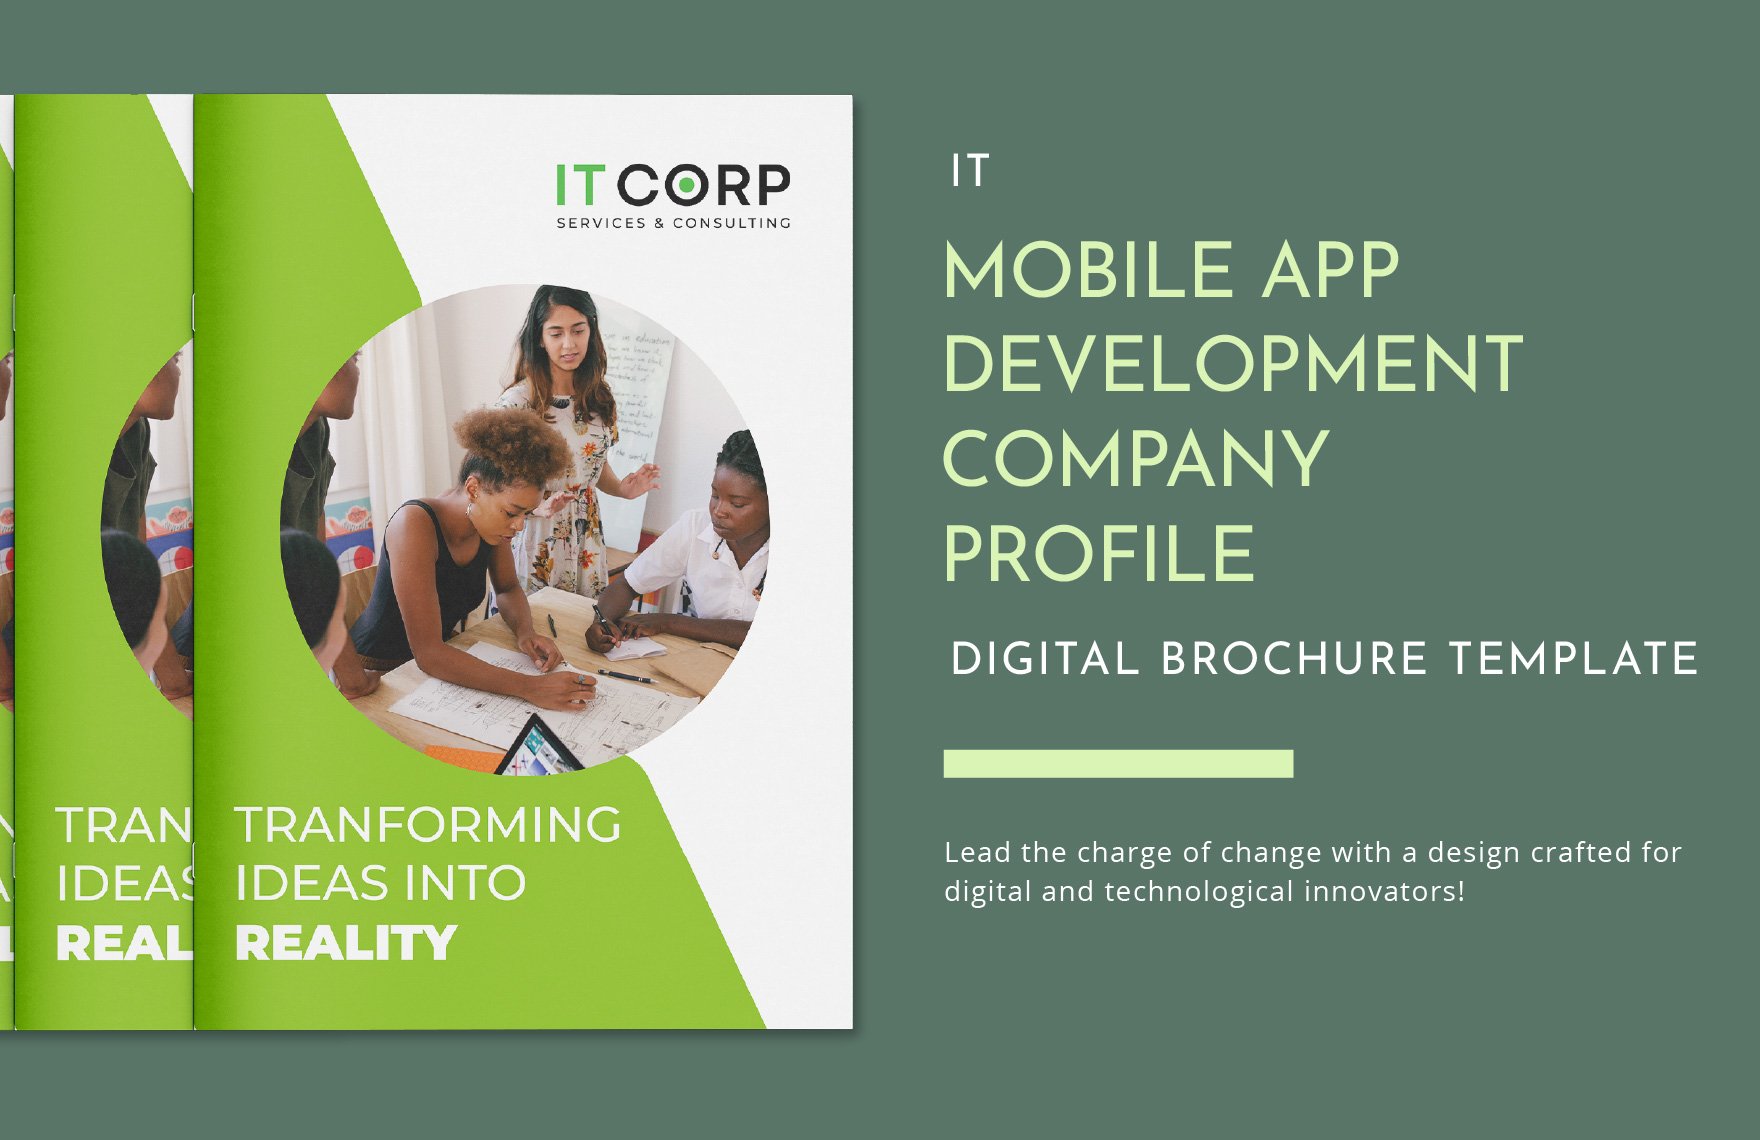 IT Mobile App Development Company Profile Digital Brochure Template